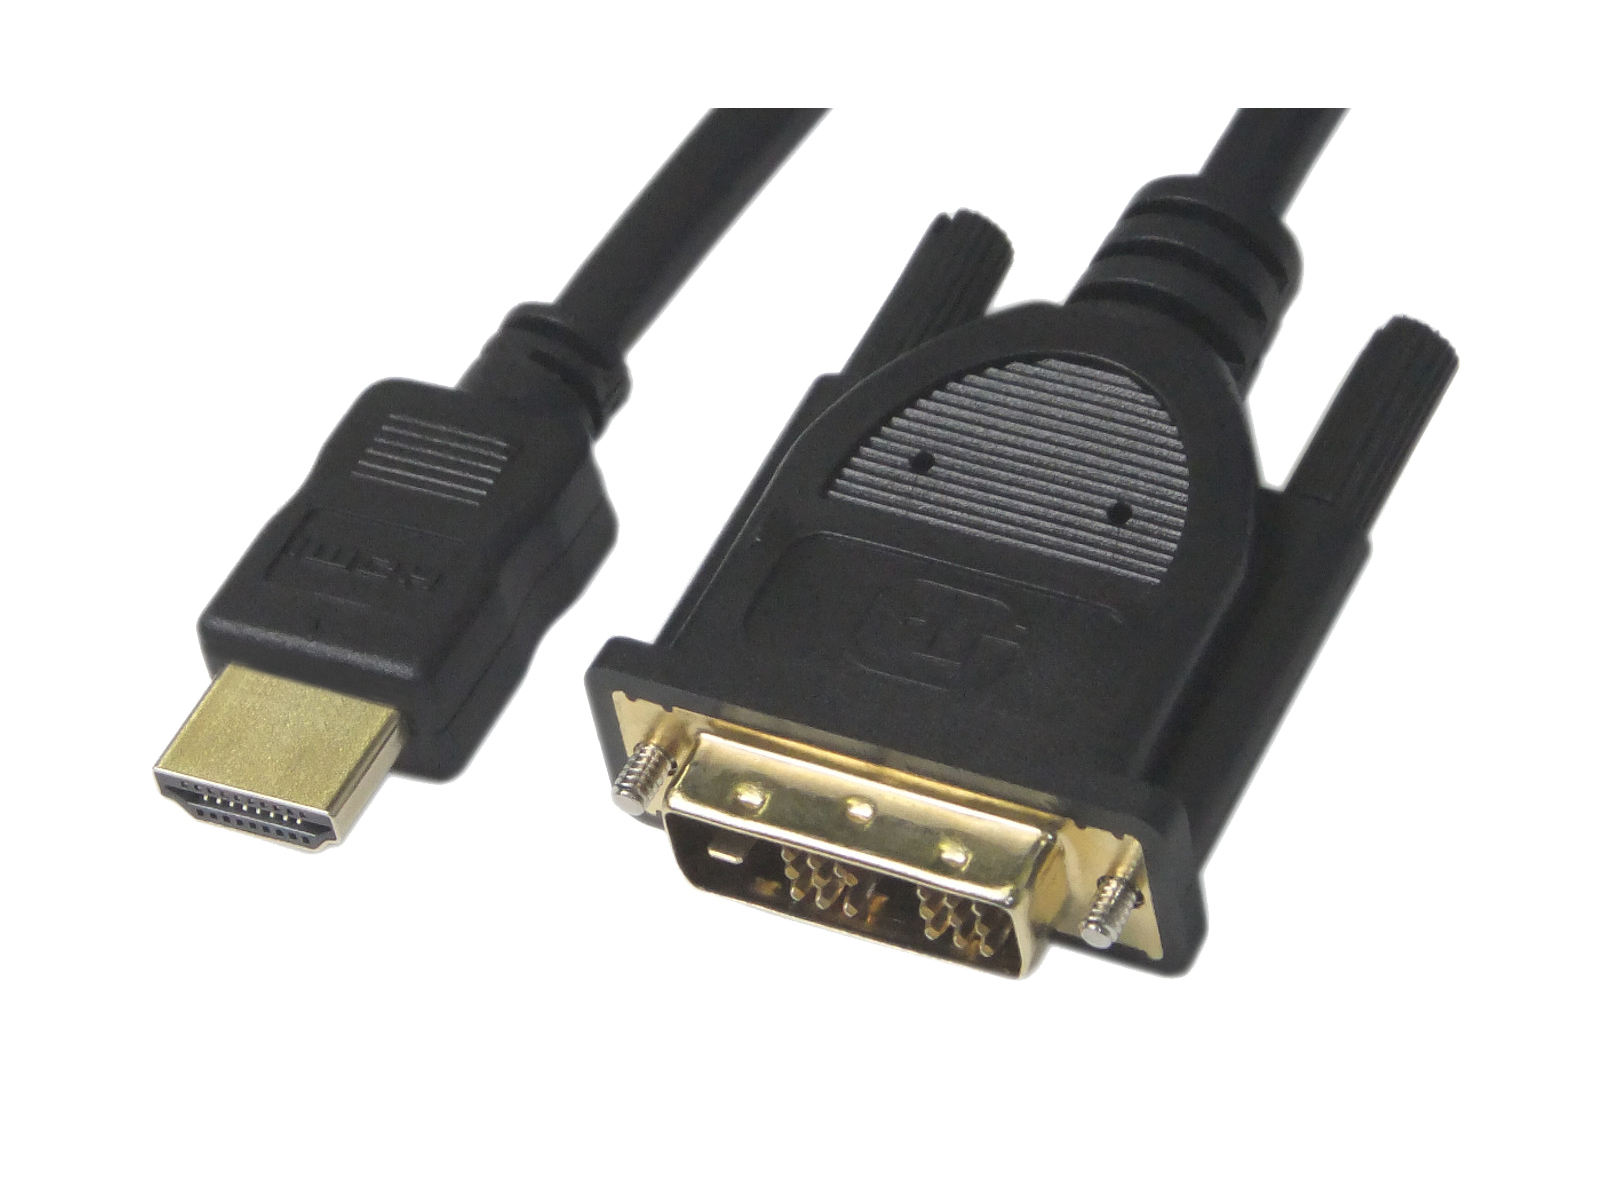 vodaview HDMI-DVI 後払い手数料無料 変換ケーブル1.0m DVI⇔HDMI 両方向対応 〔黒〕〔全結線仕様〕 【最安値挑戦】 送料無料 メール便